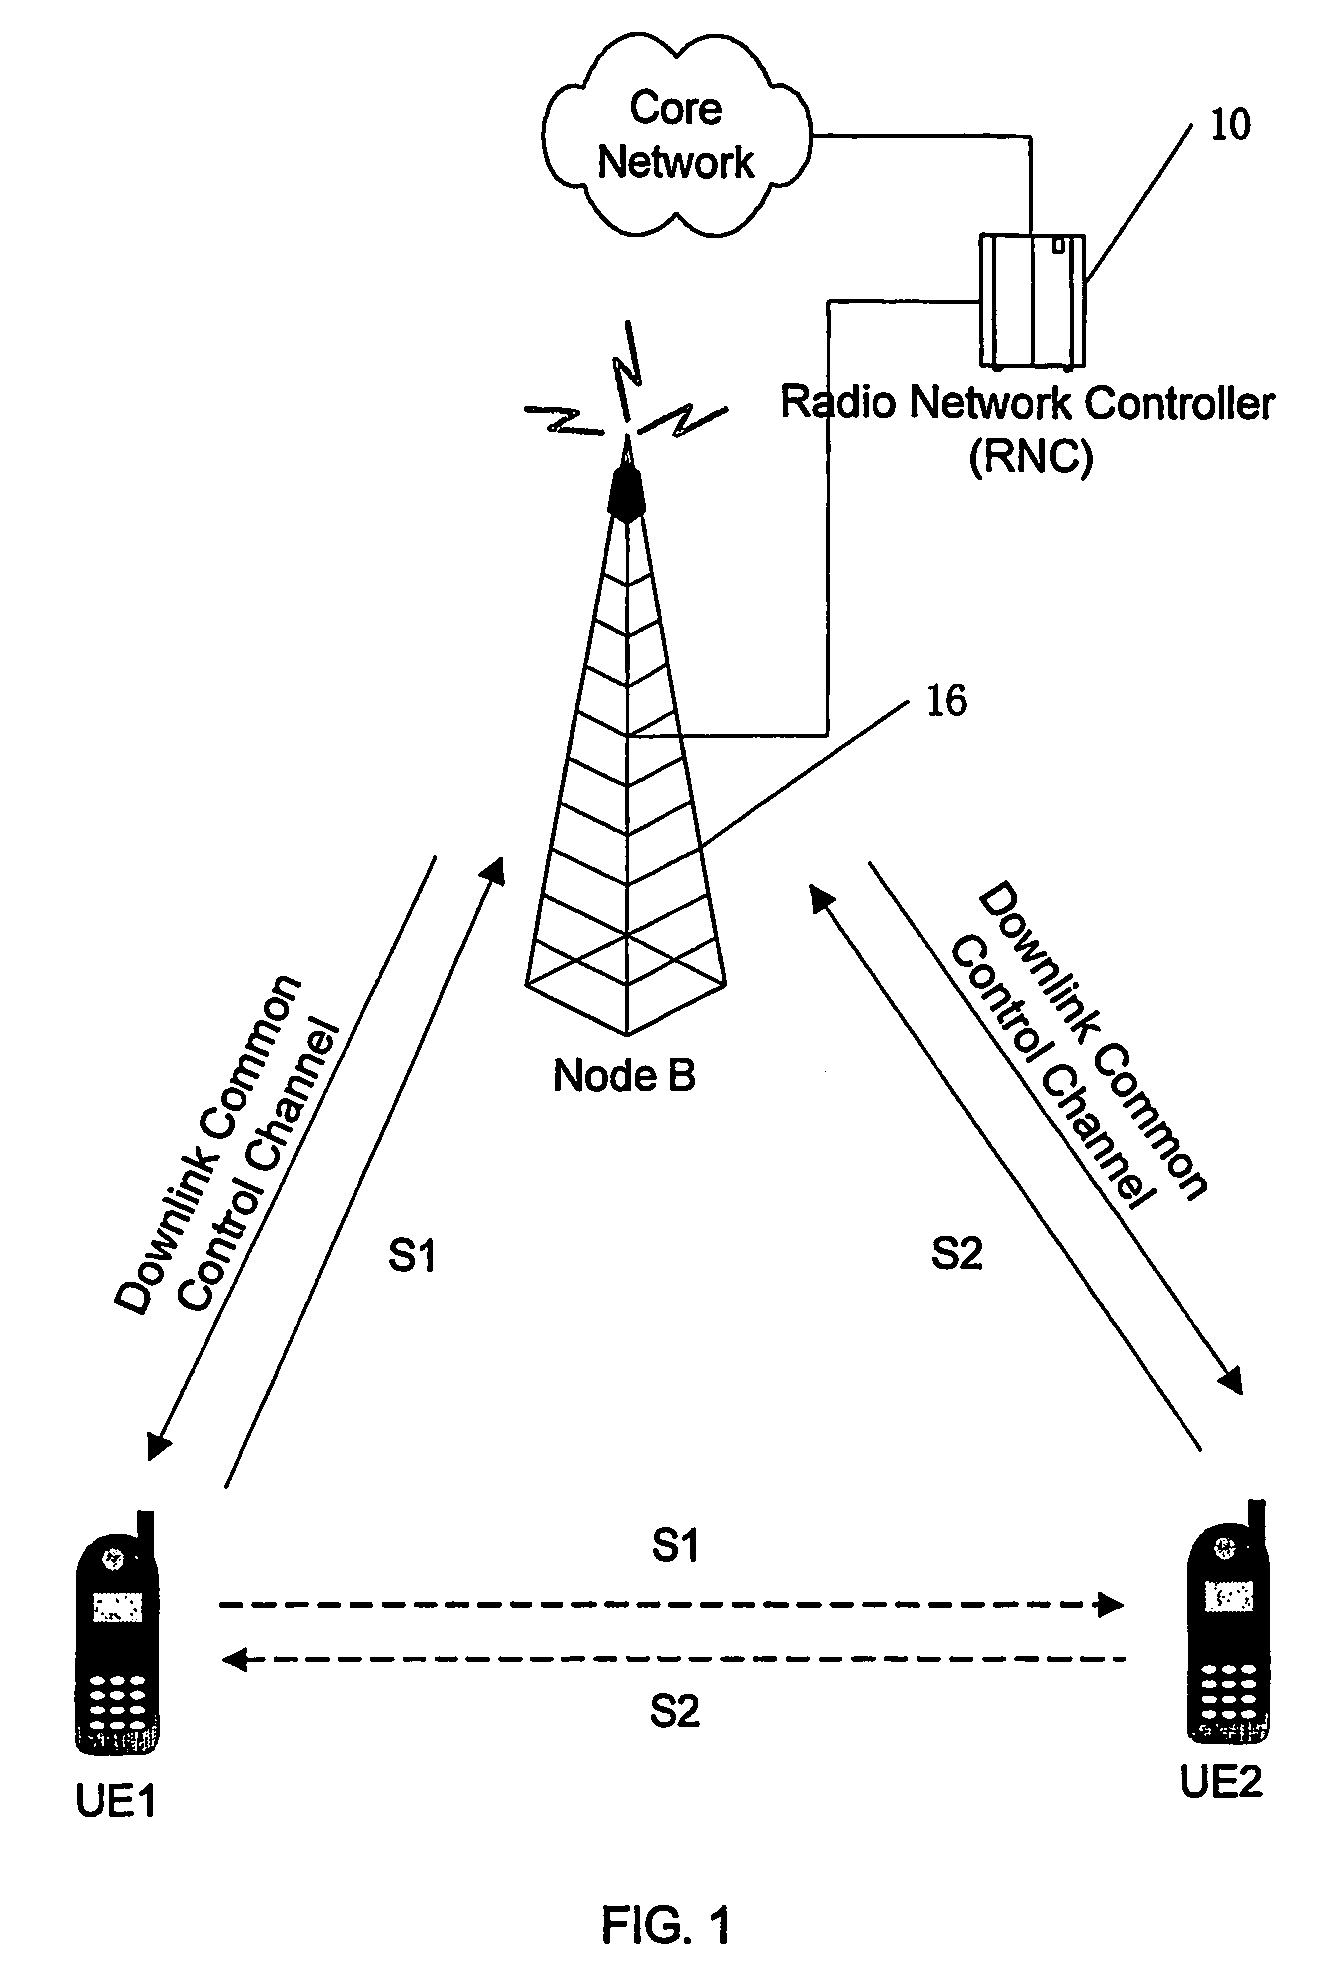 Method and system for establishing wireless peer-to-peer communications